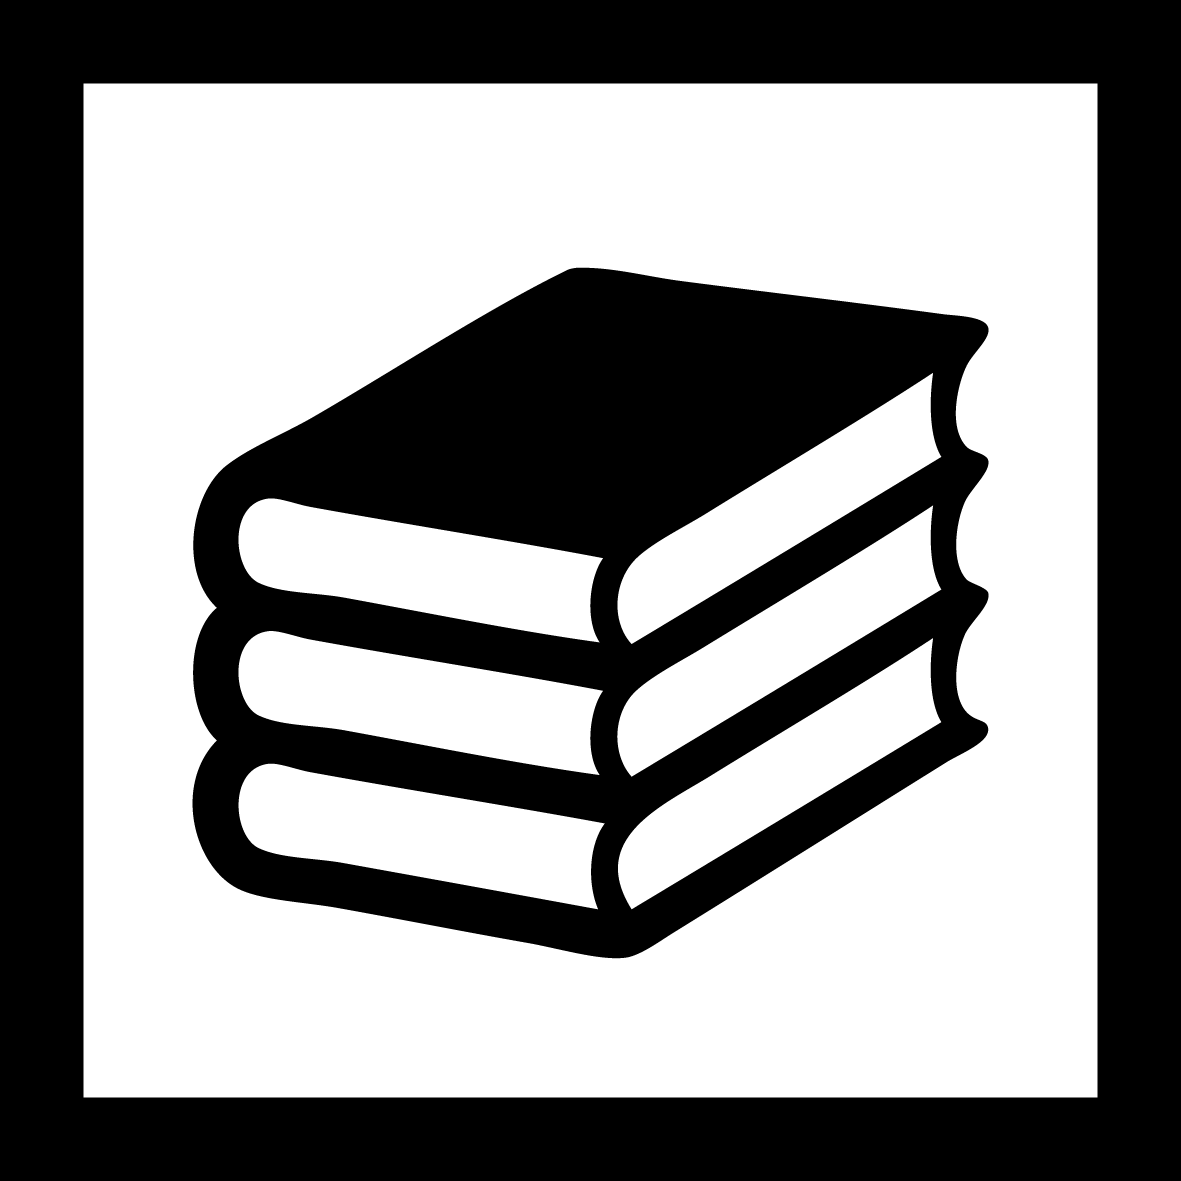 Book icon. Значок книжки. Книжка пиктограмма. Книжные иконки. Книга символ.